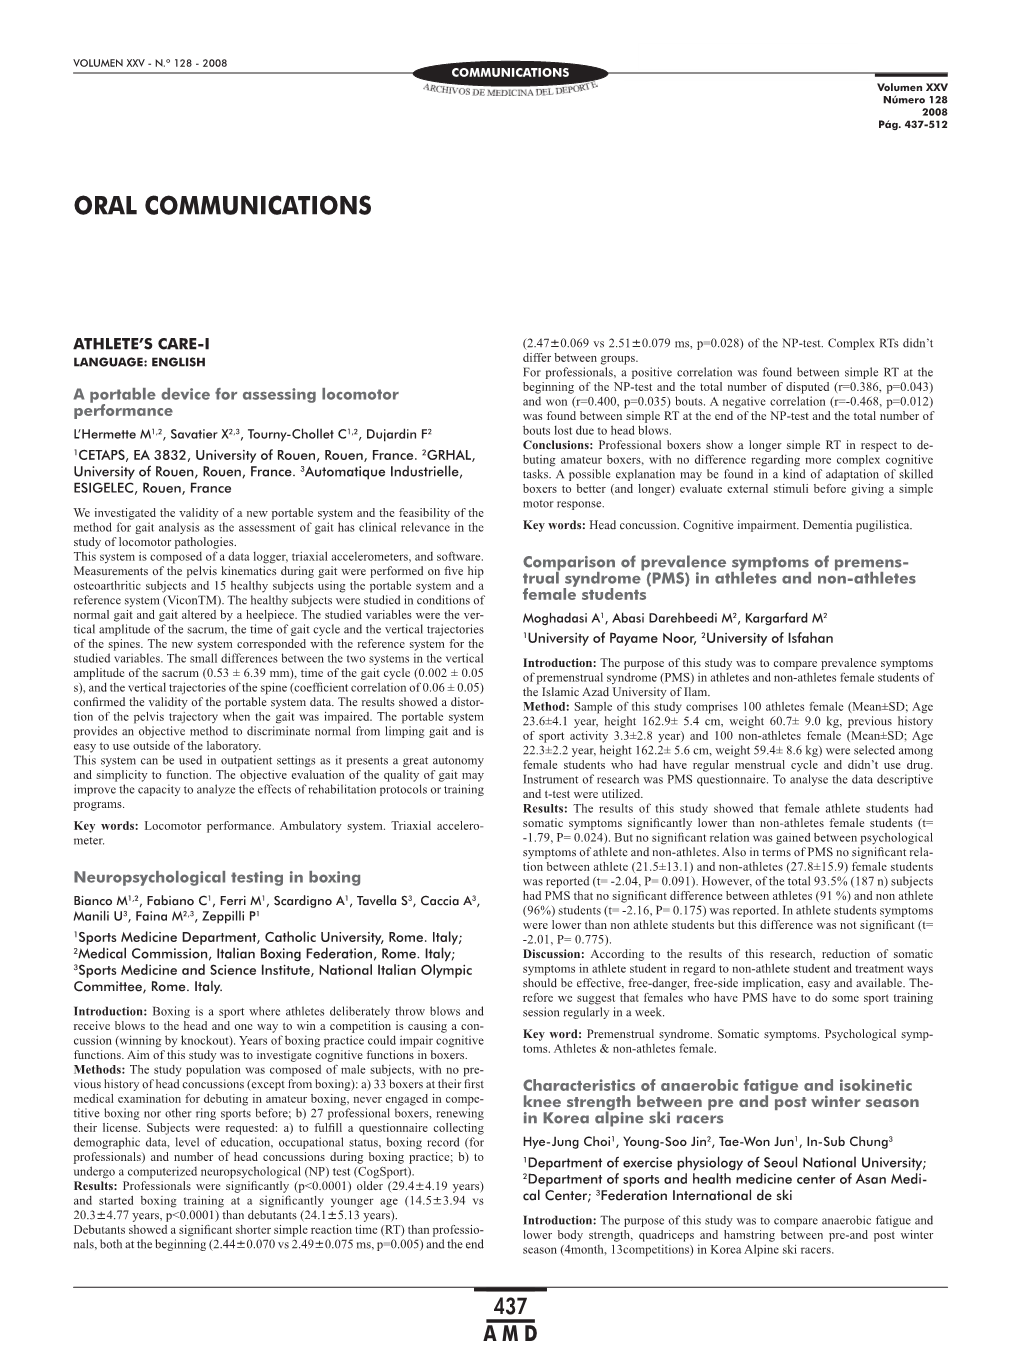 ORAL Communicationsvolumen XXV Número 128 2008 Pág